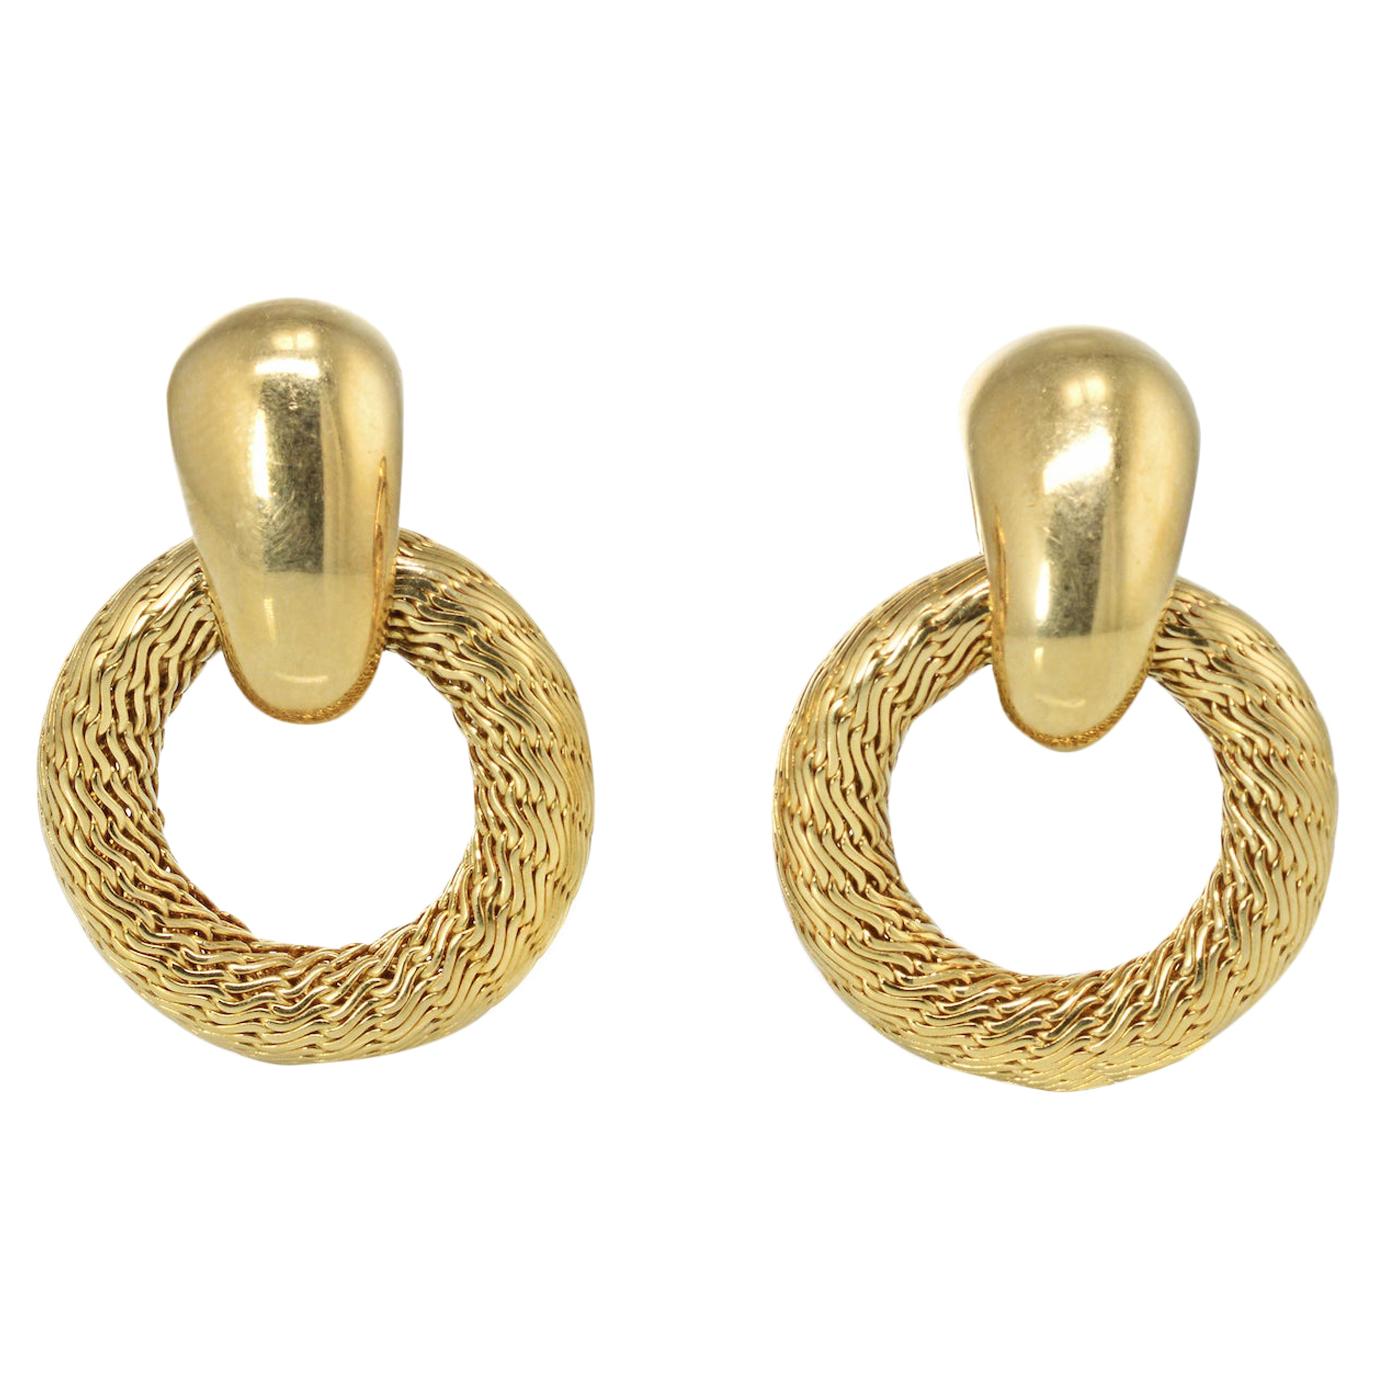 Tiffany & Co. Yellow Gold Vintage Door Knockers Circle Pierced Earrings